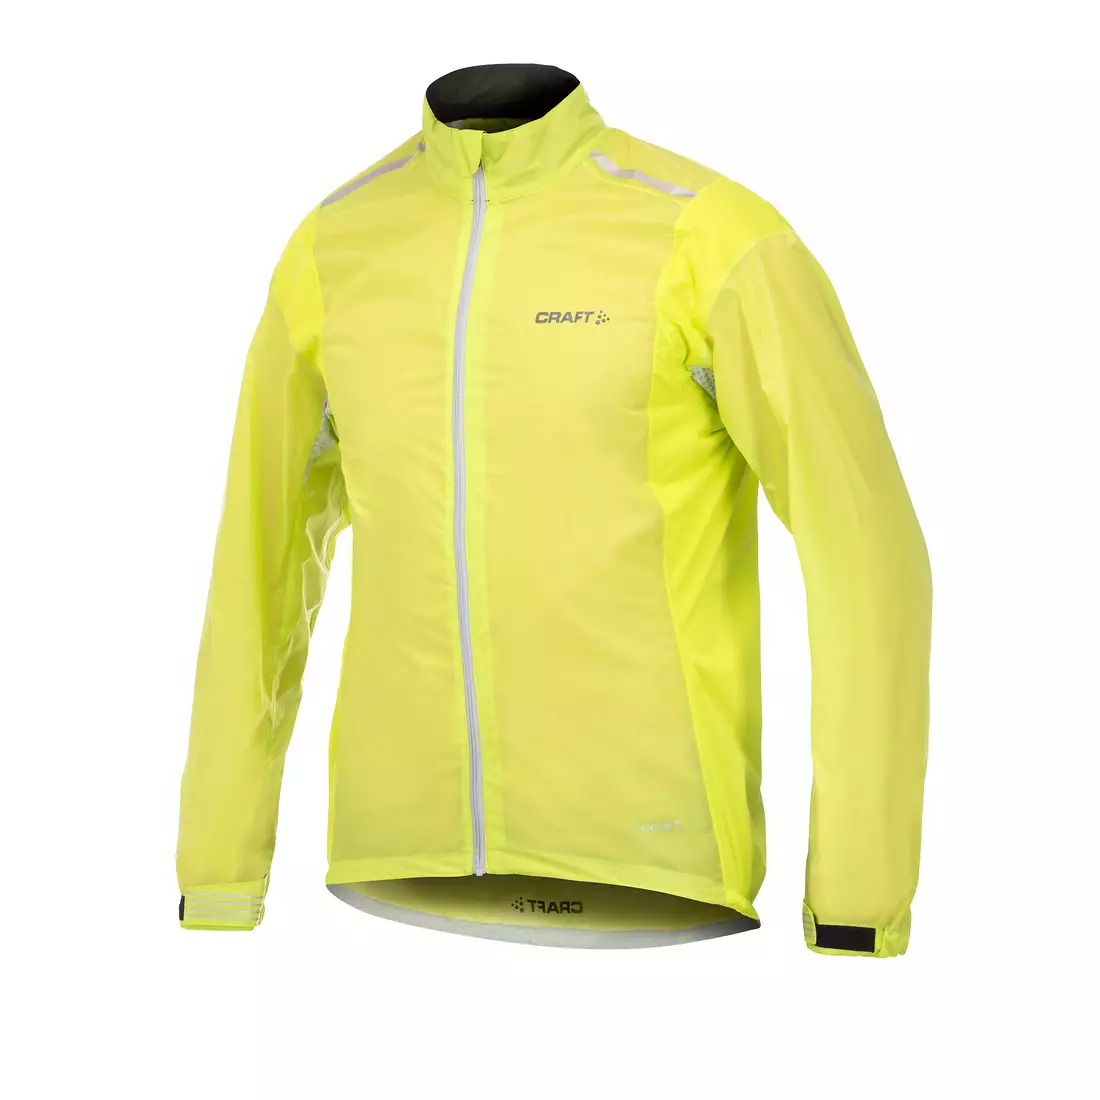 CRAFT PERFORMANCE BIKE - ultralight men's cycling jacket 1902577-1800, color: fluorine